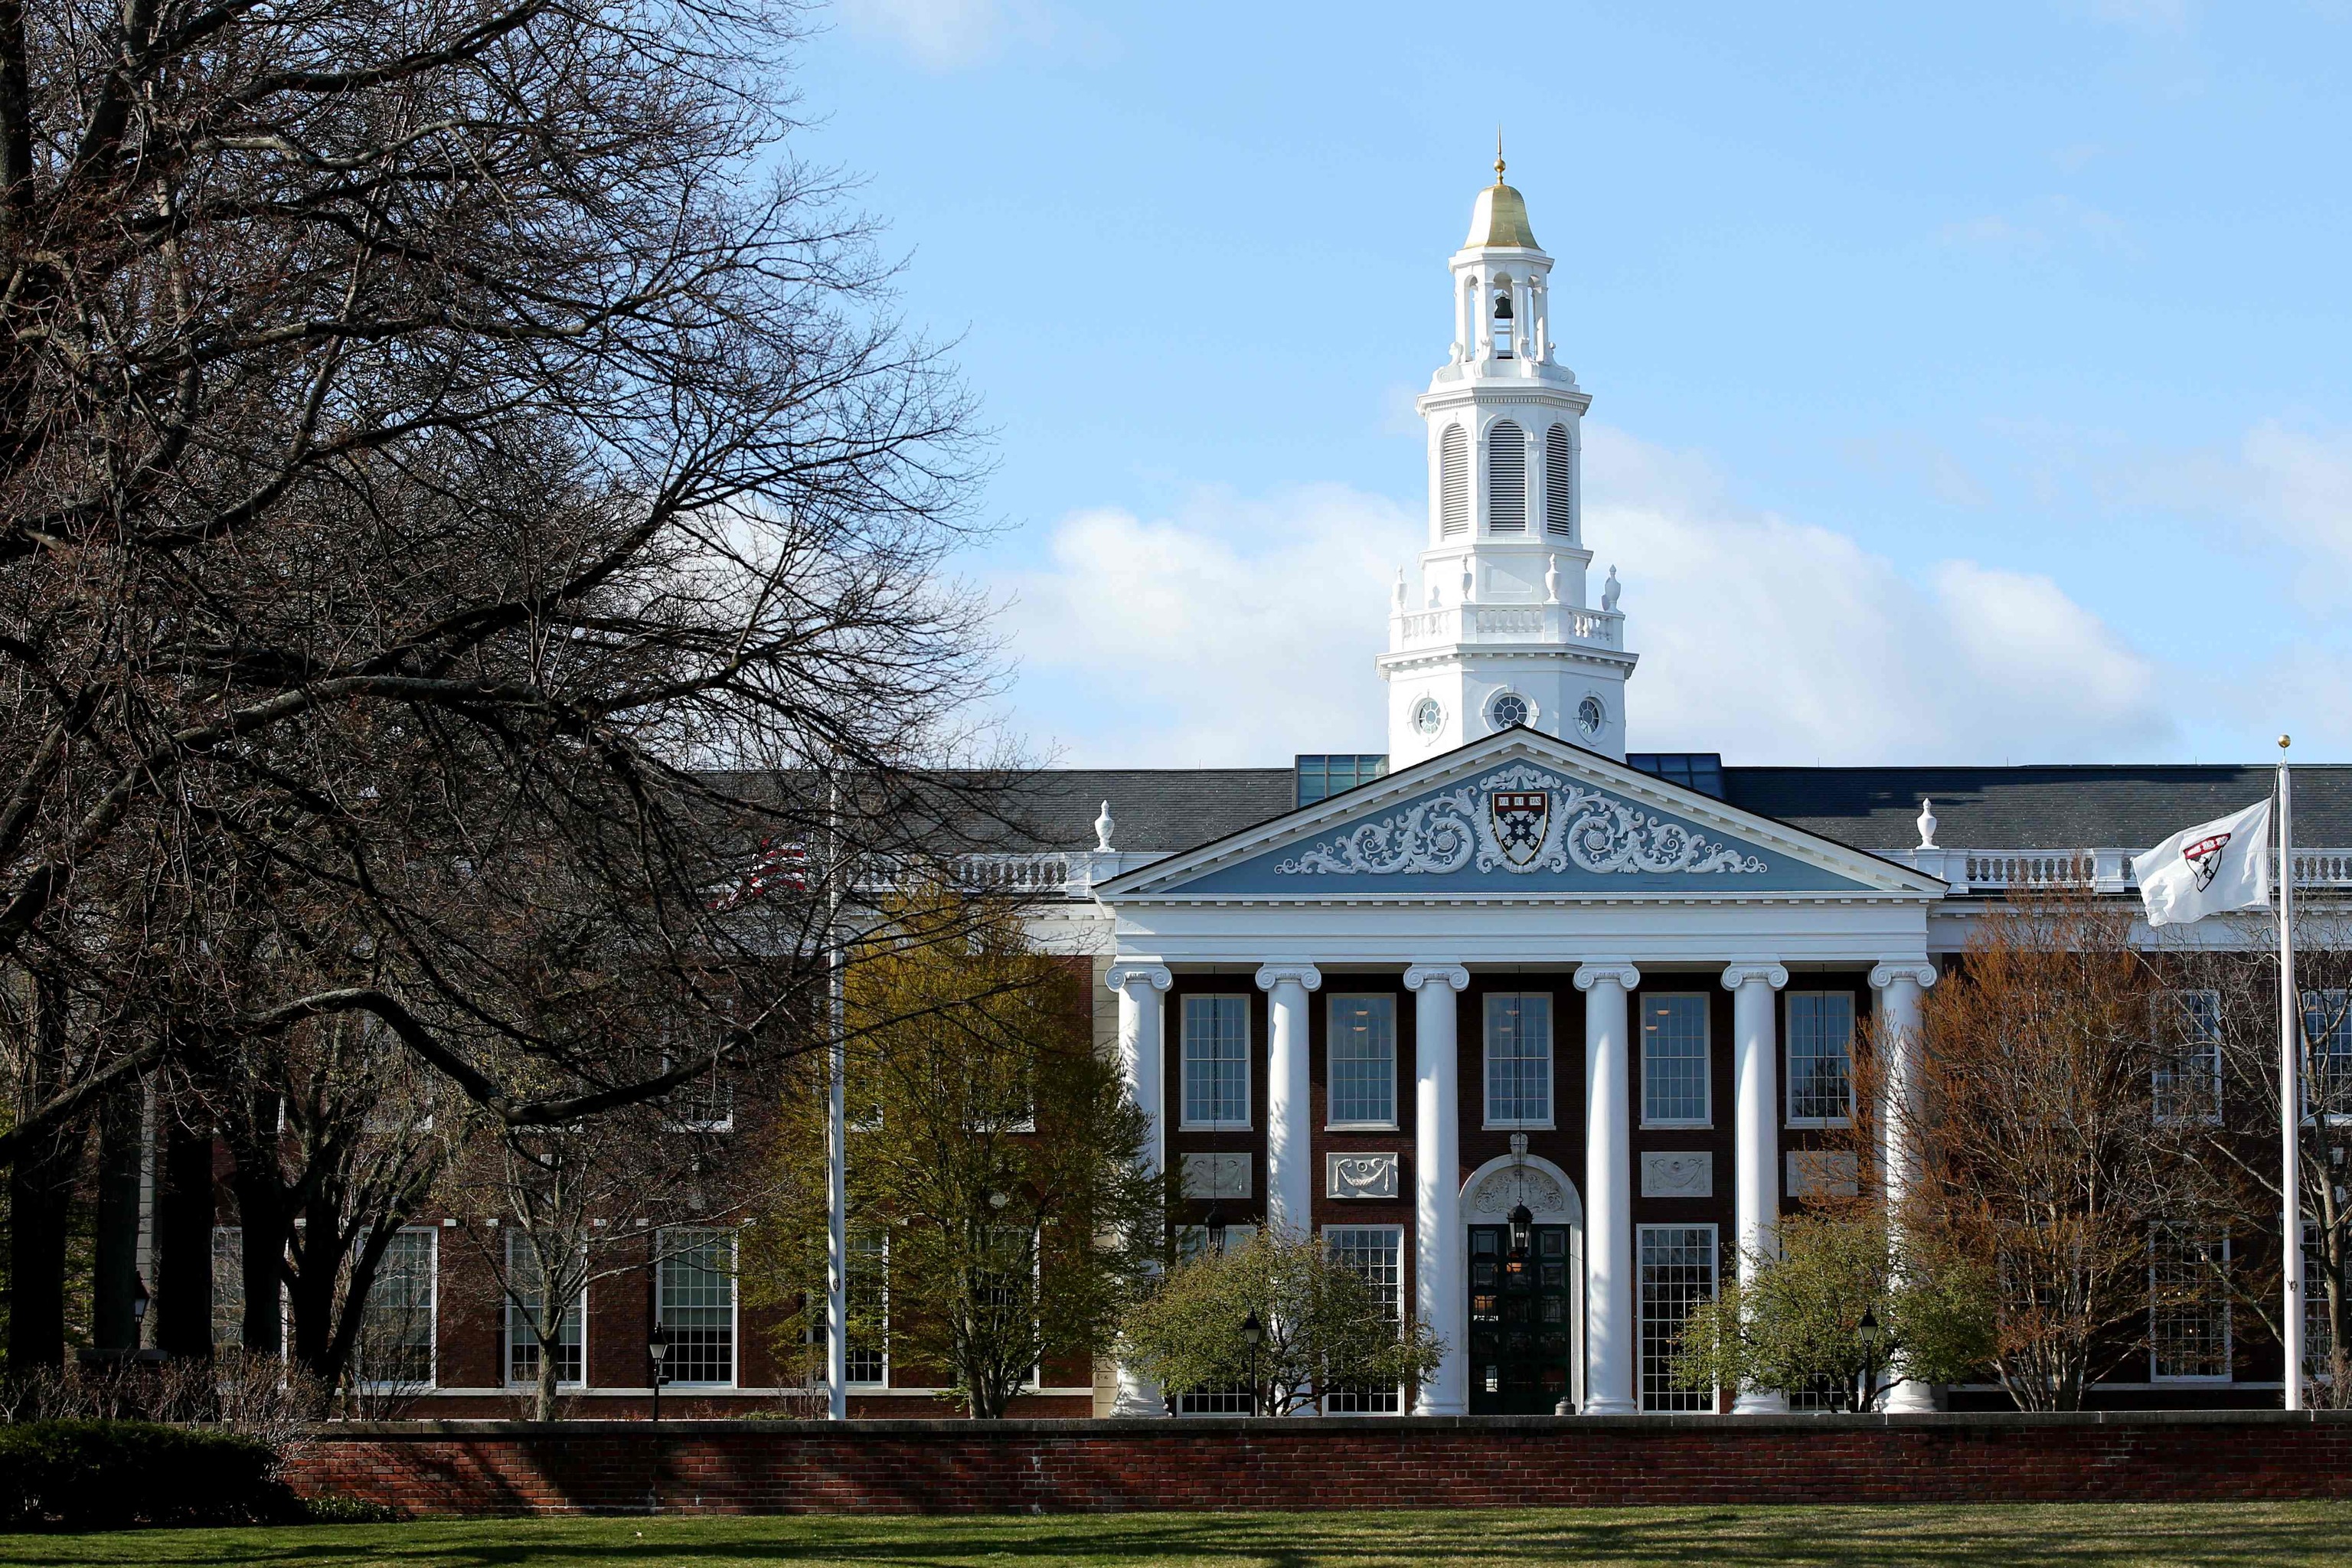 Foto de archivo tomada el 22 de abril de 2020, muestra una vista general del campus de la Universidad de Harvard en Cambridge, Massachusetts